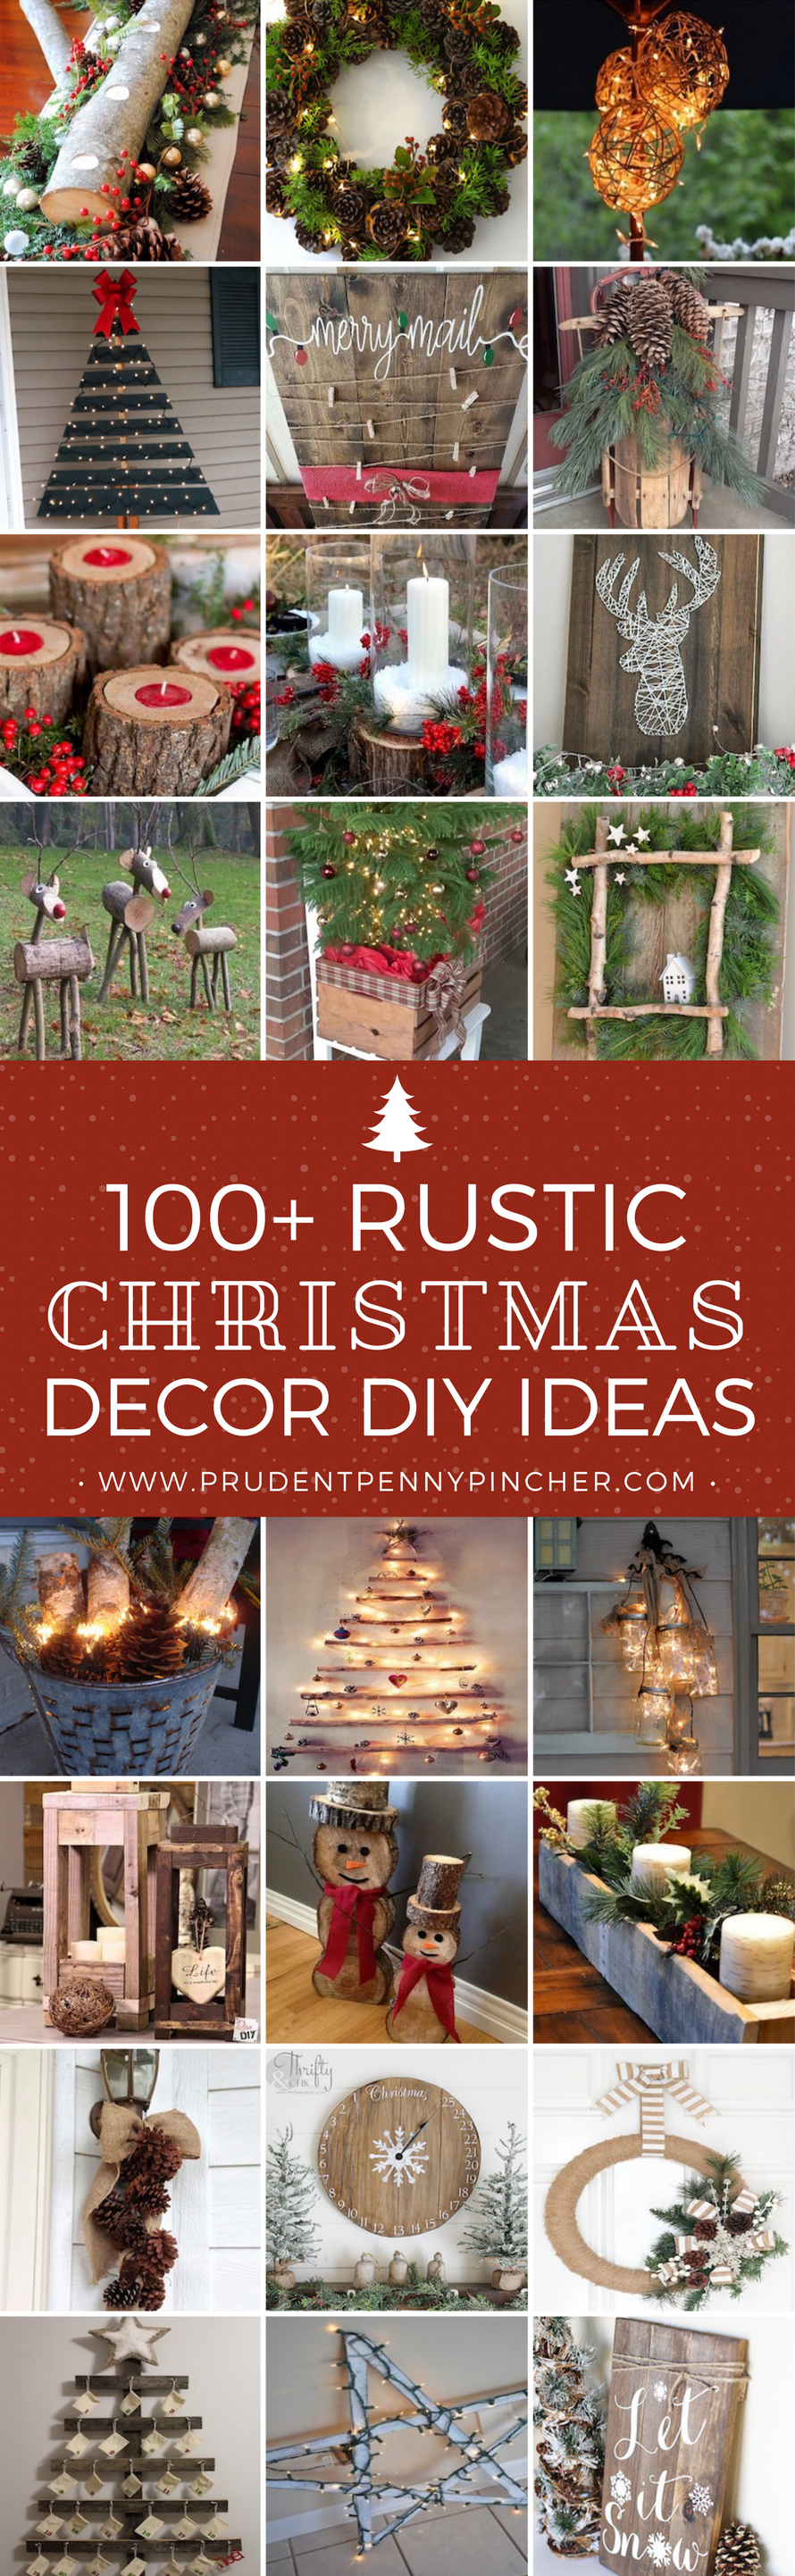 100 Rustic Christmas Decor DIY Ideas  Prudent Penny Pincher